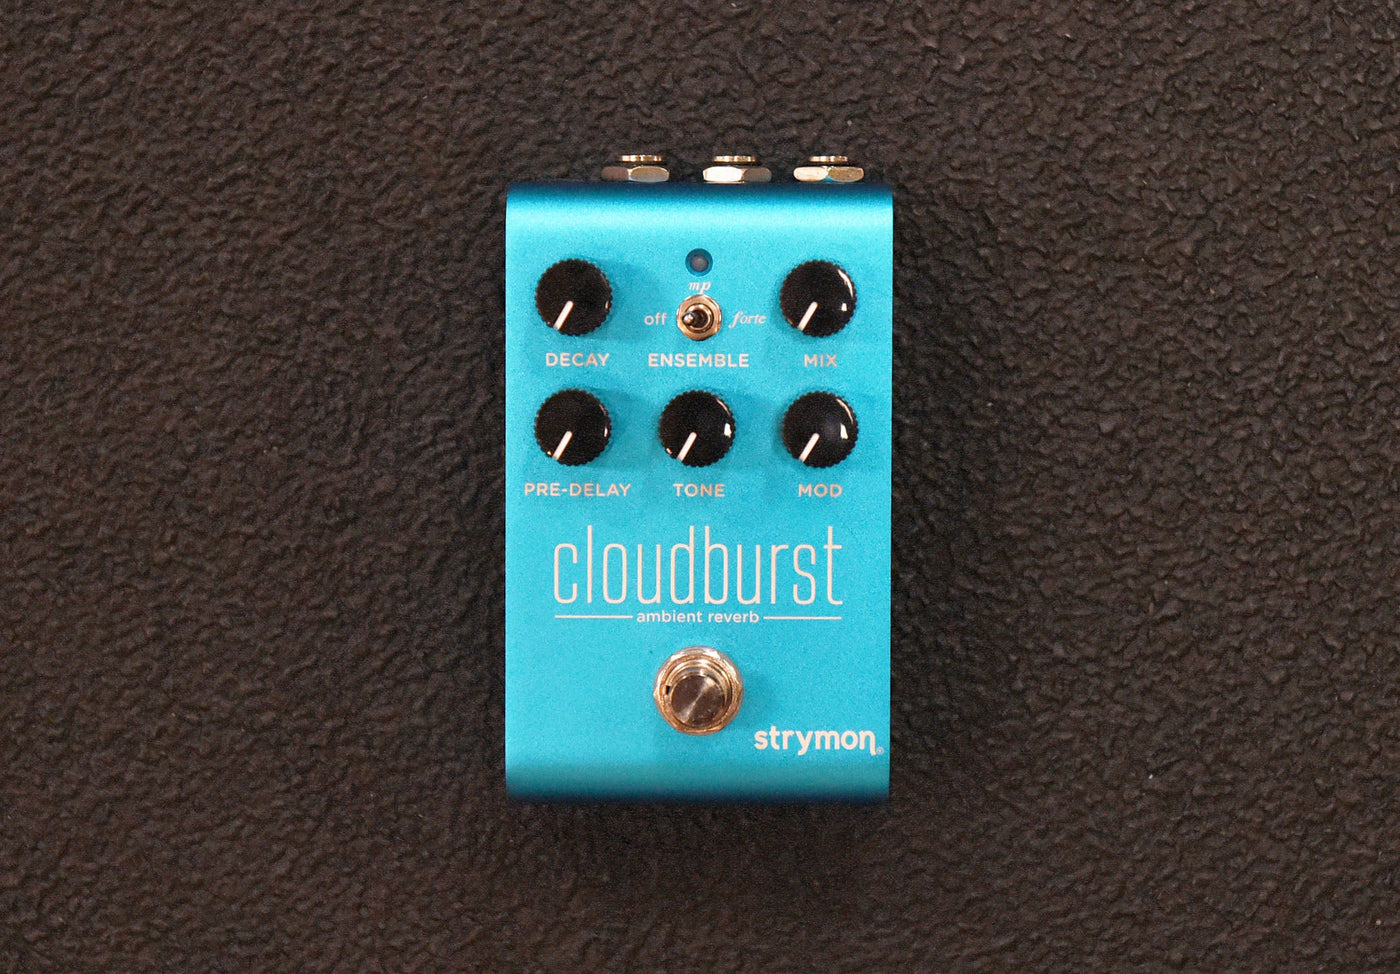 Cloudburst - $279